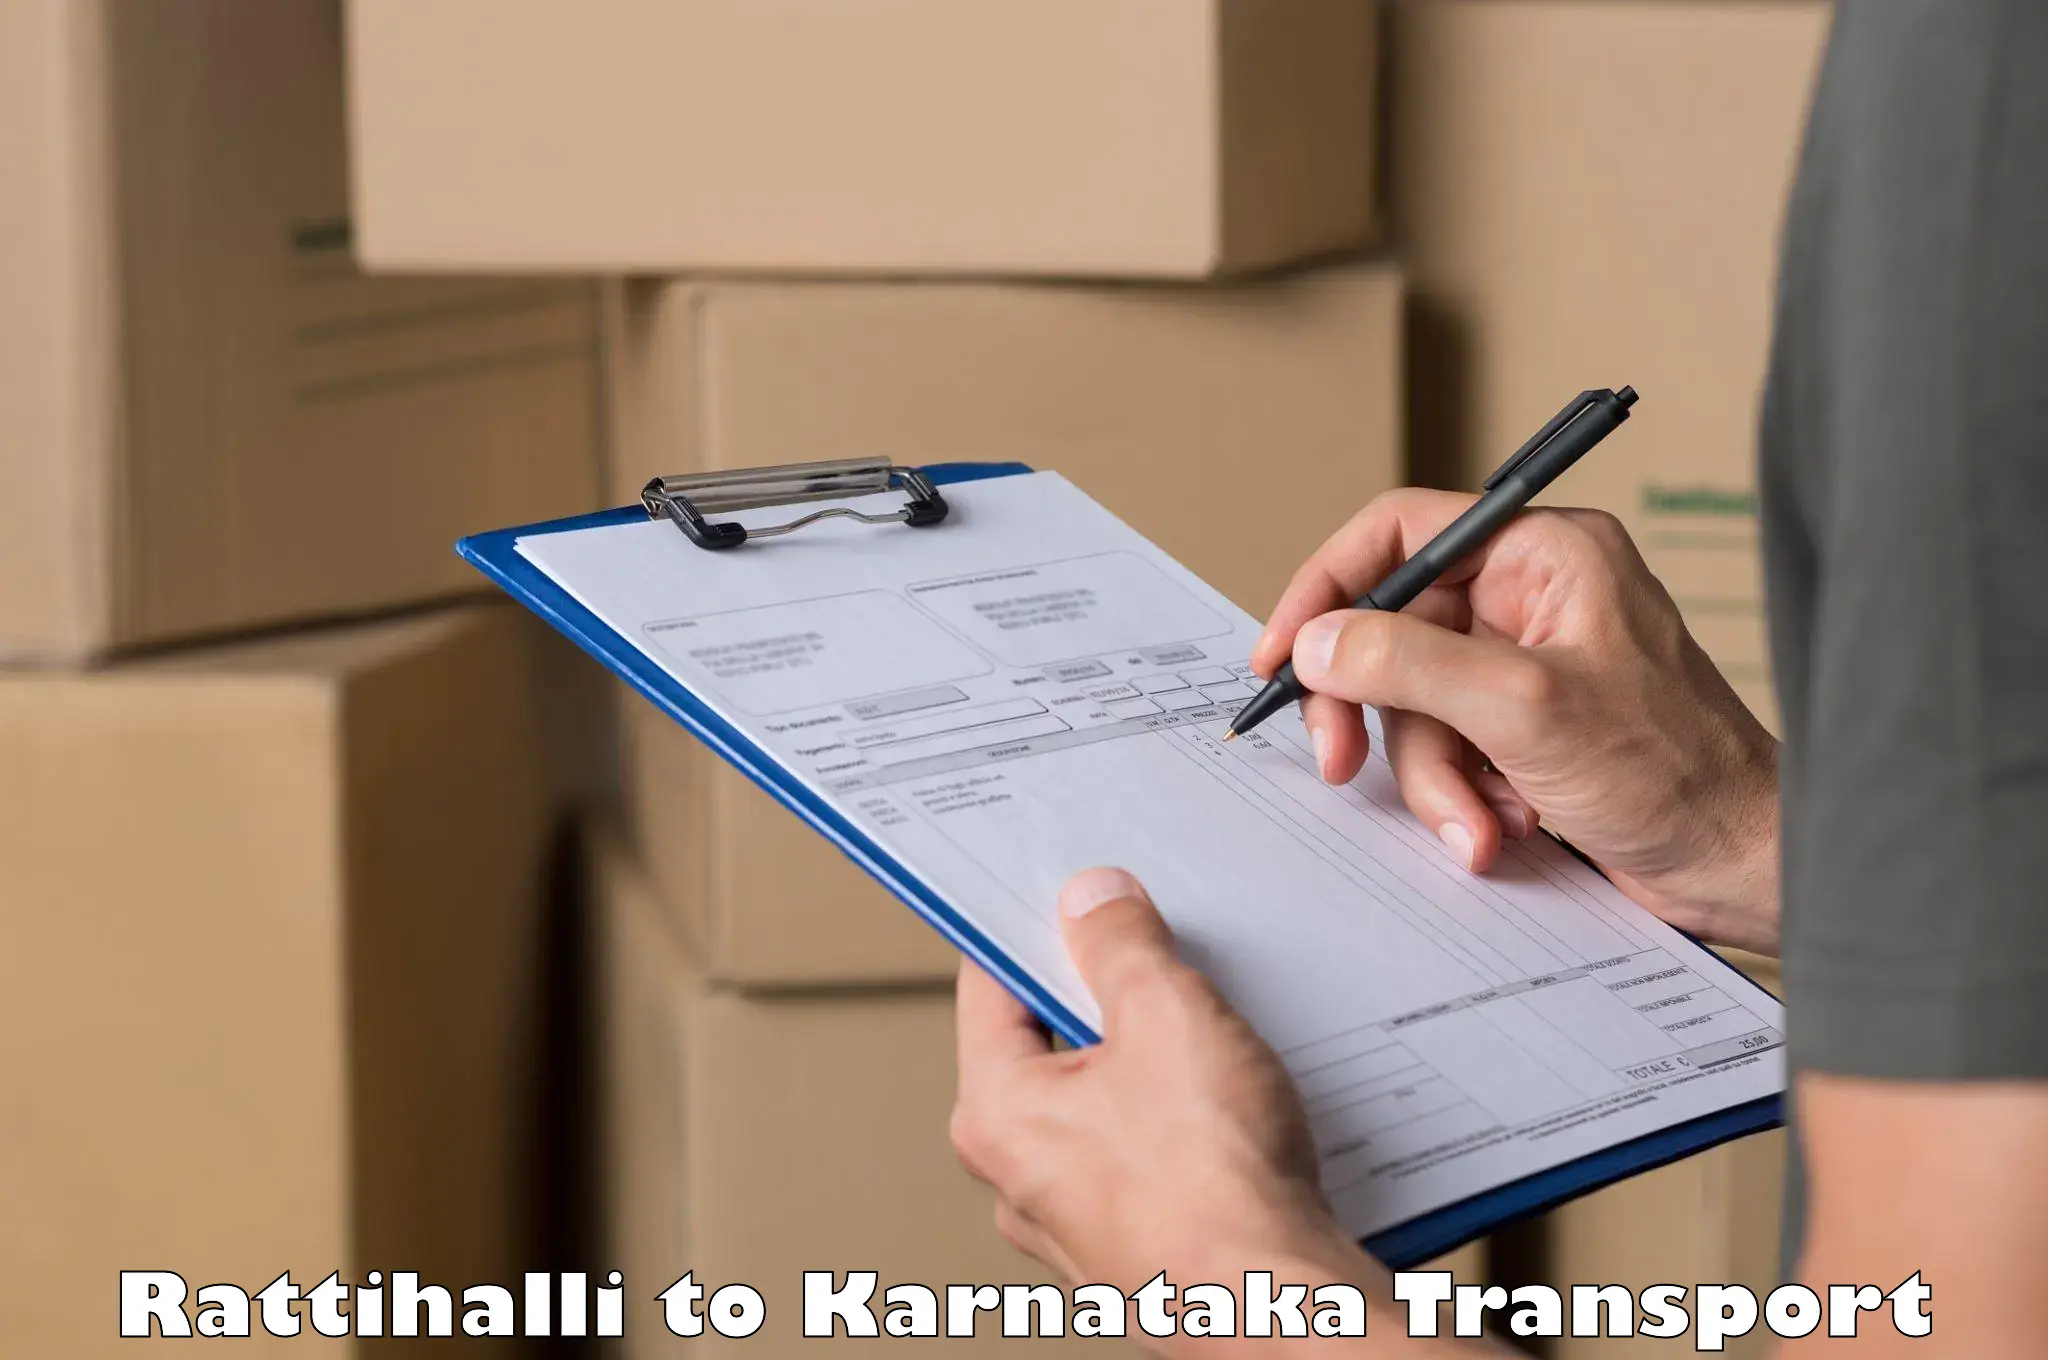 Truck transport companies in India Rattihalli to Haveri